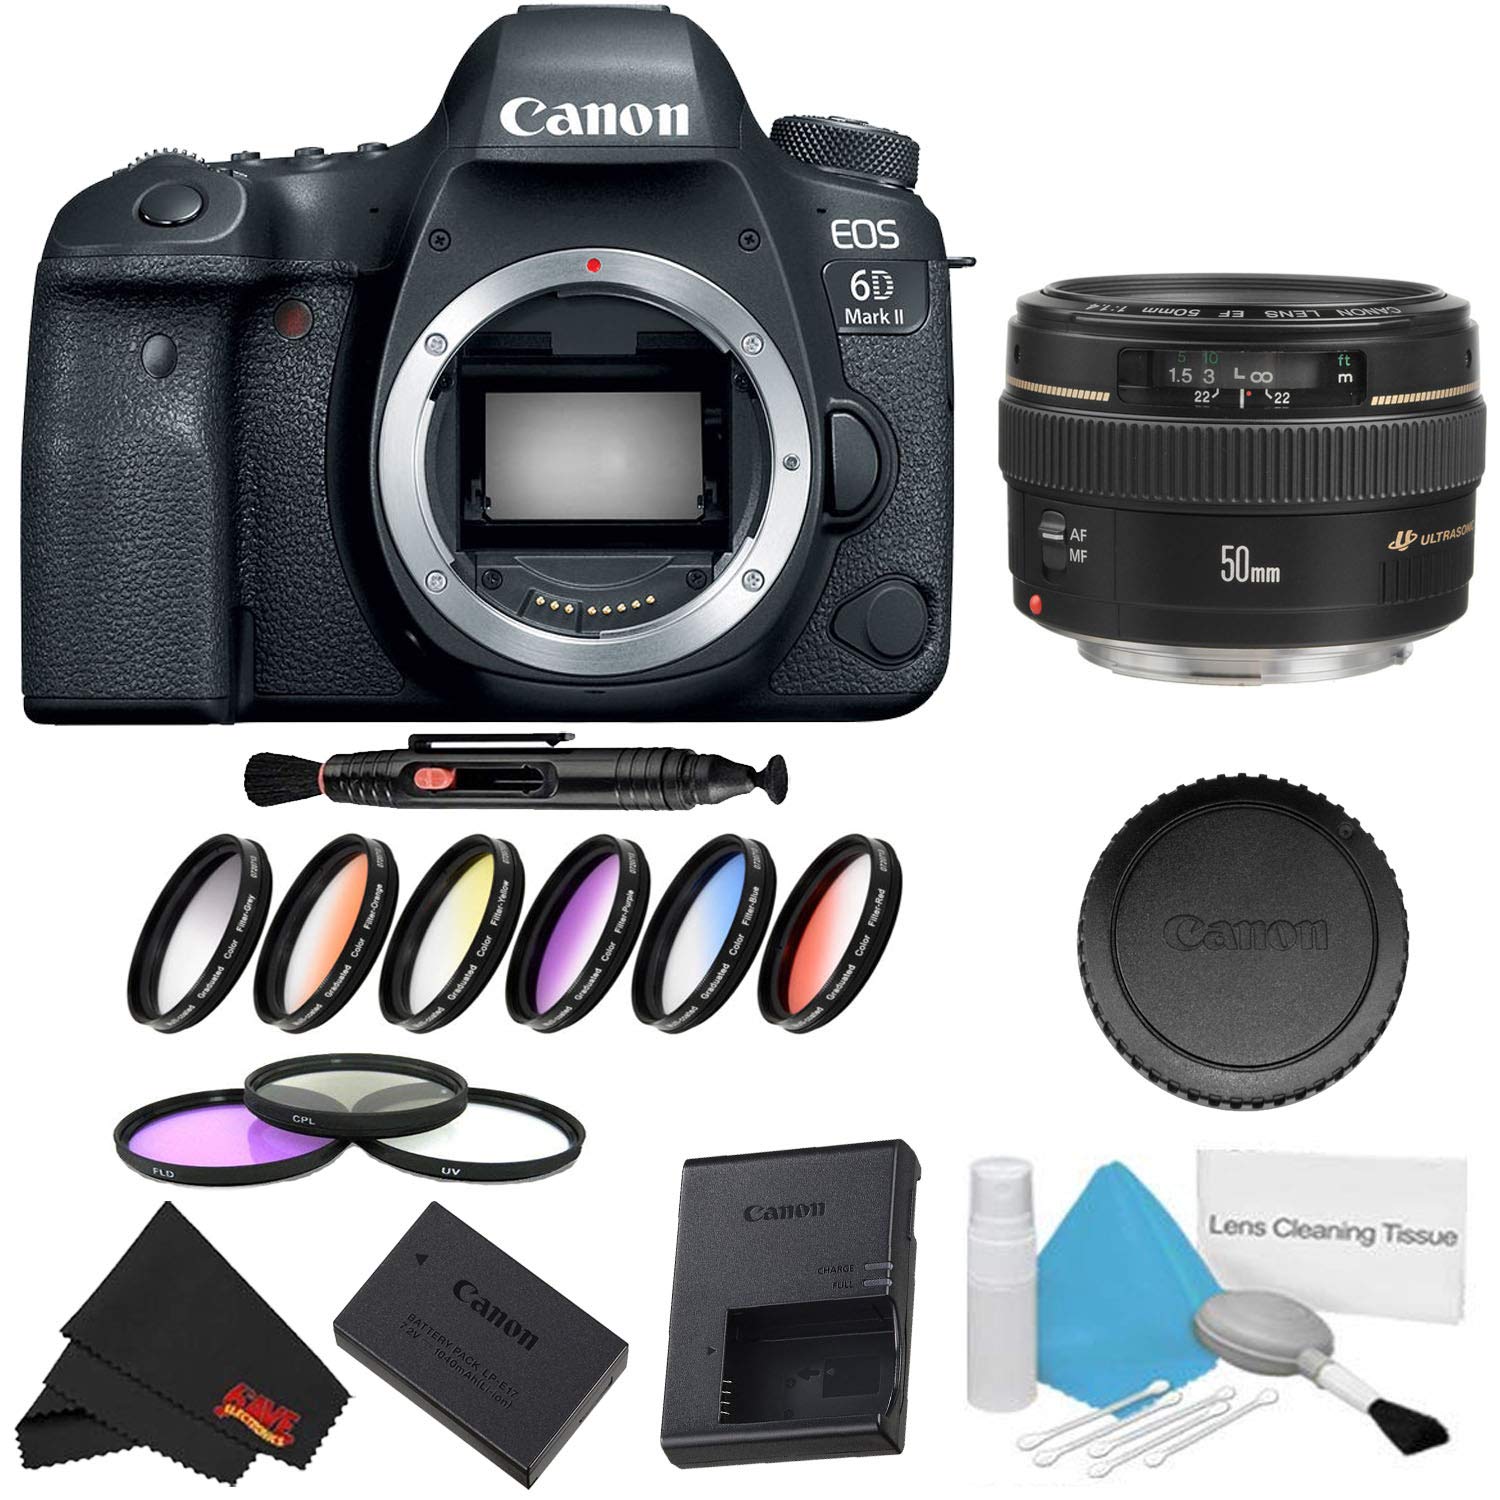 Canon EOS 6D Mark II DSLR Camera (Body Only) 9 Piece Filter Bundle + Canon EF 50mm f/1.4 USM Lens - International Model